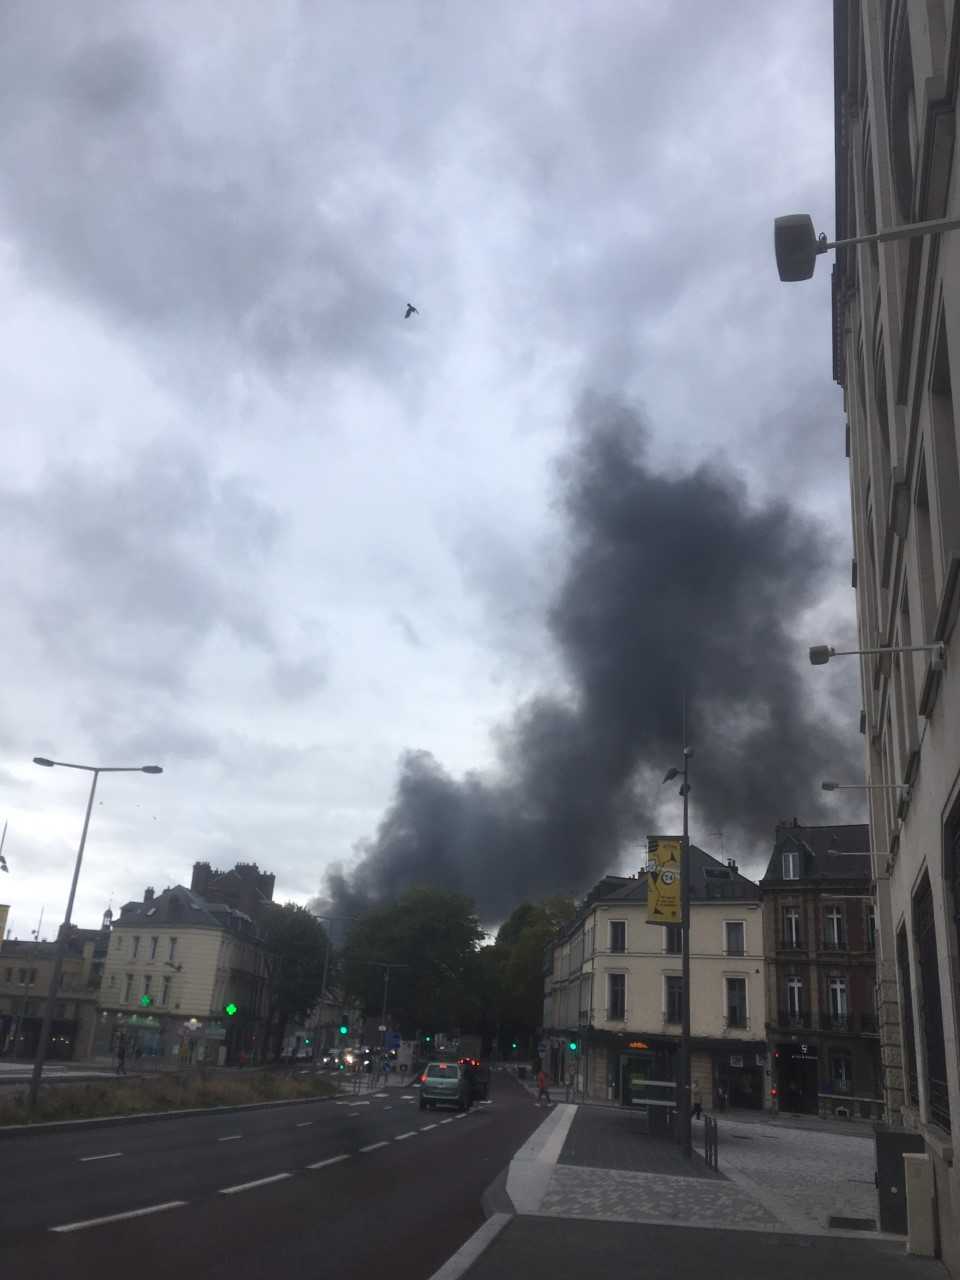 The Lubrizol fire, as it happened in Rouen